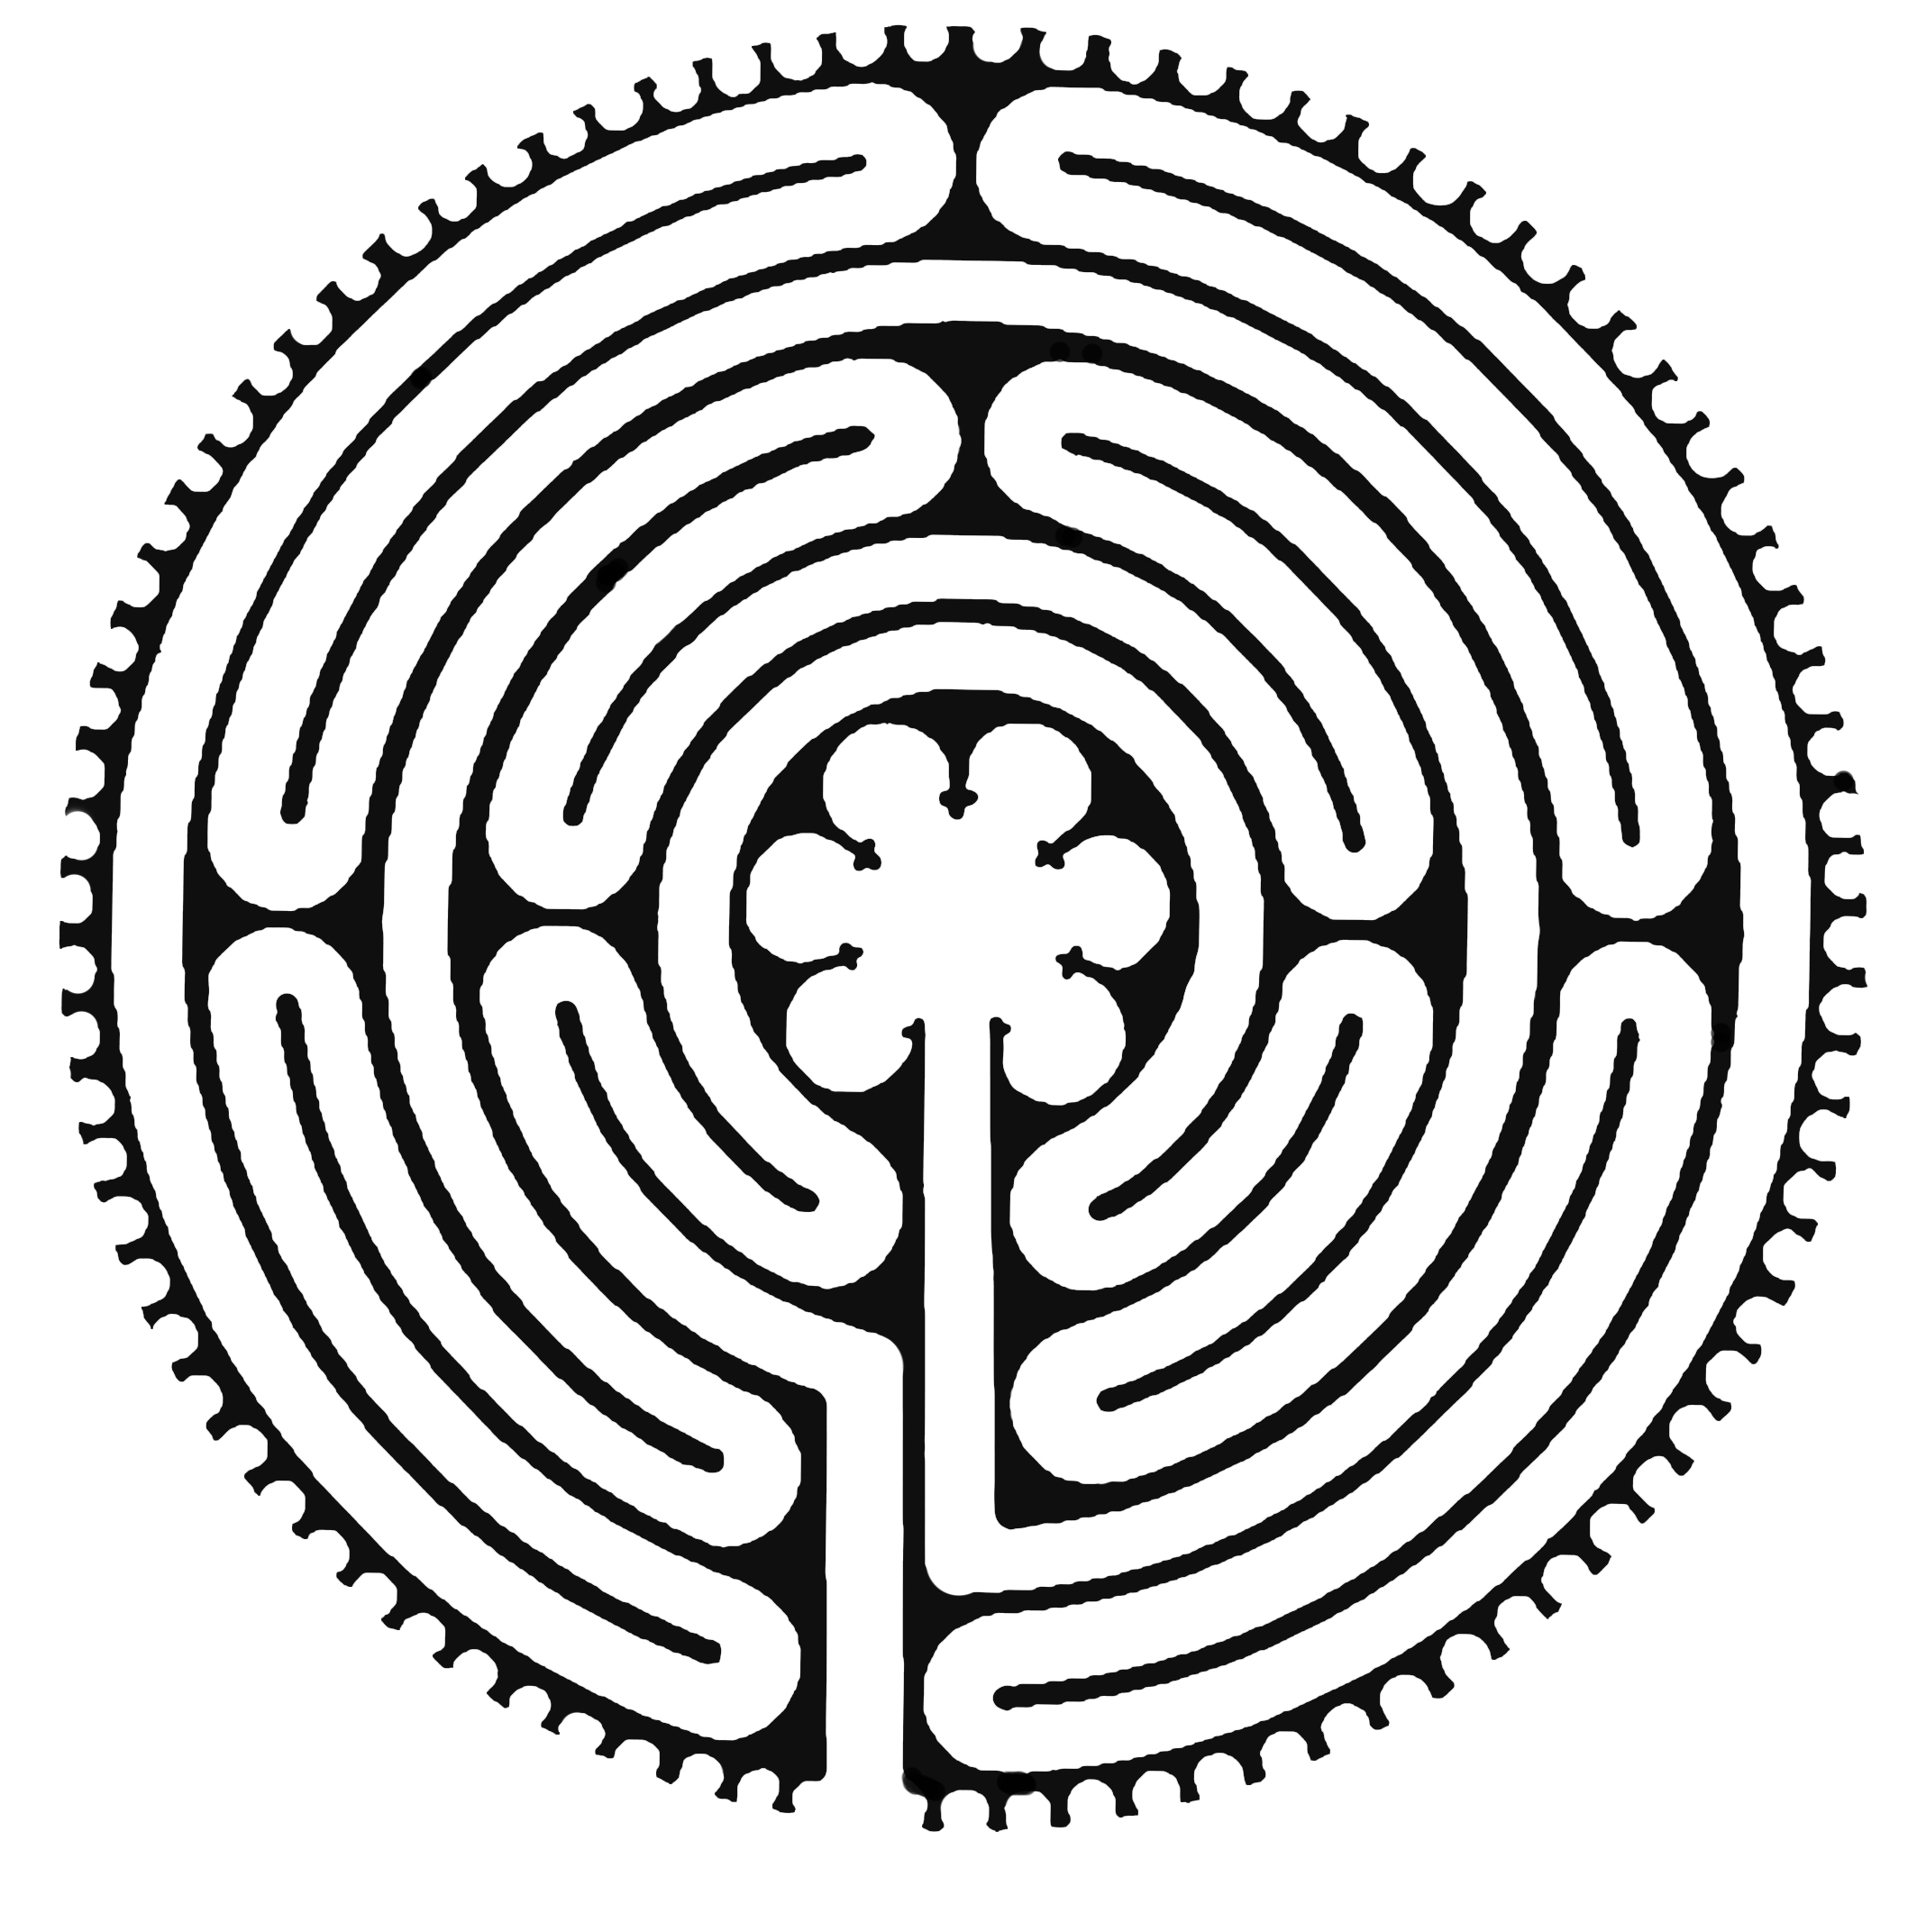 Labyrinth #7